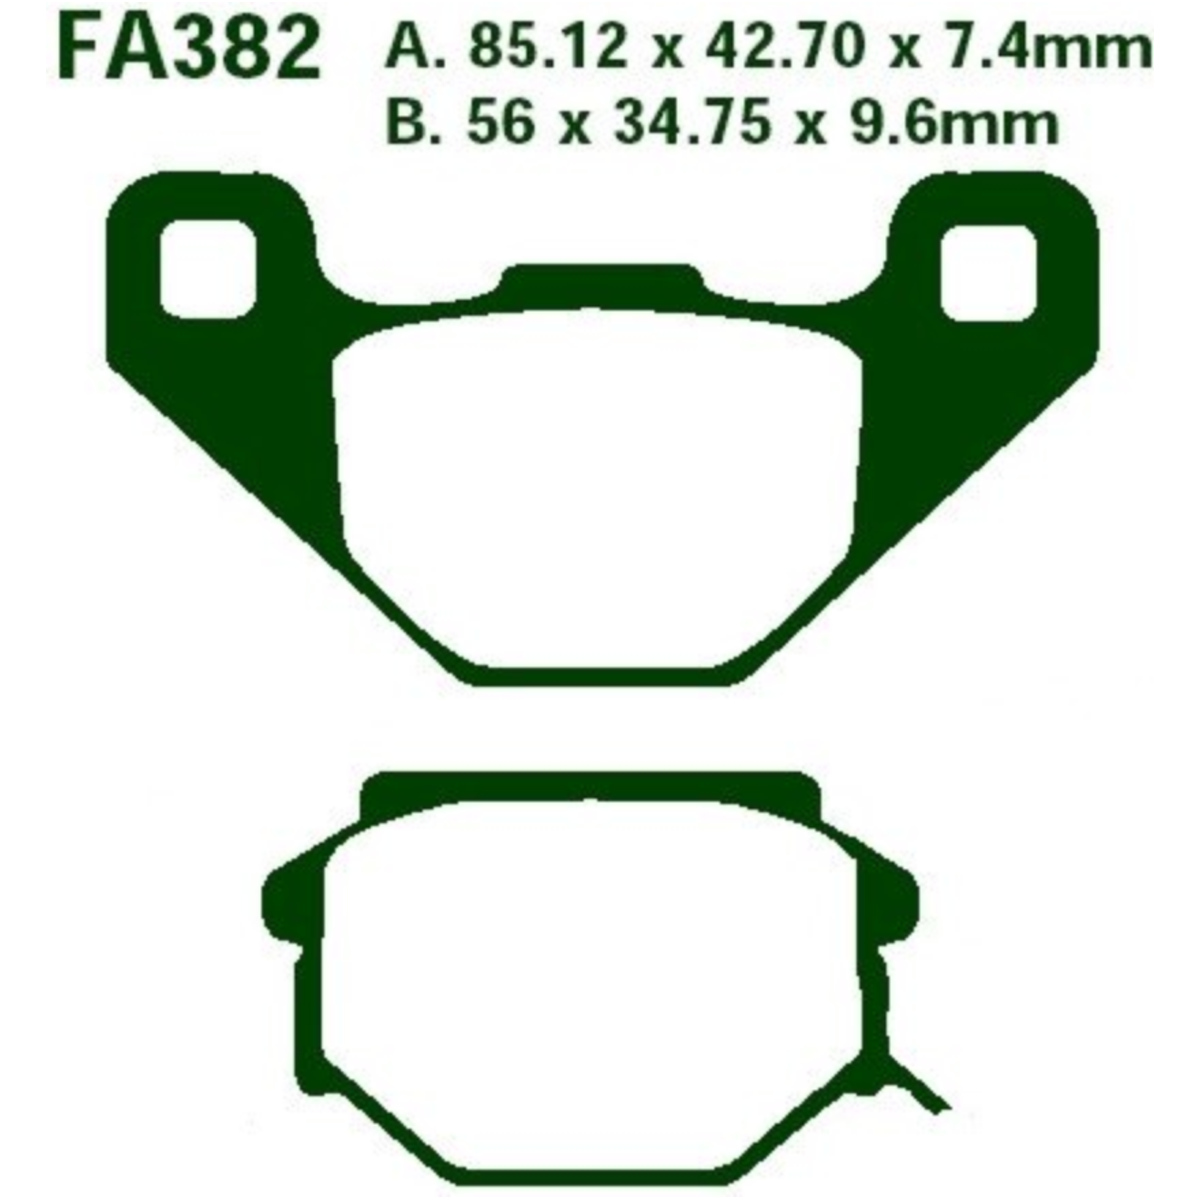 Ebc fa382 bremsbeläge bremsklotz standard von EBC